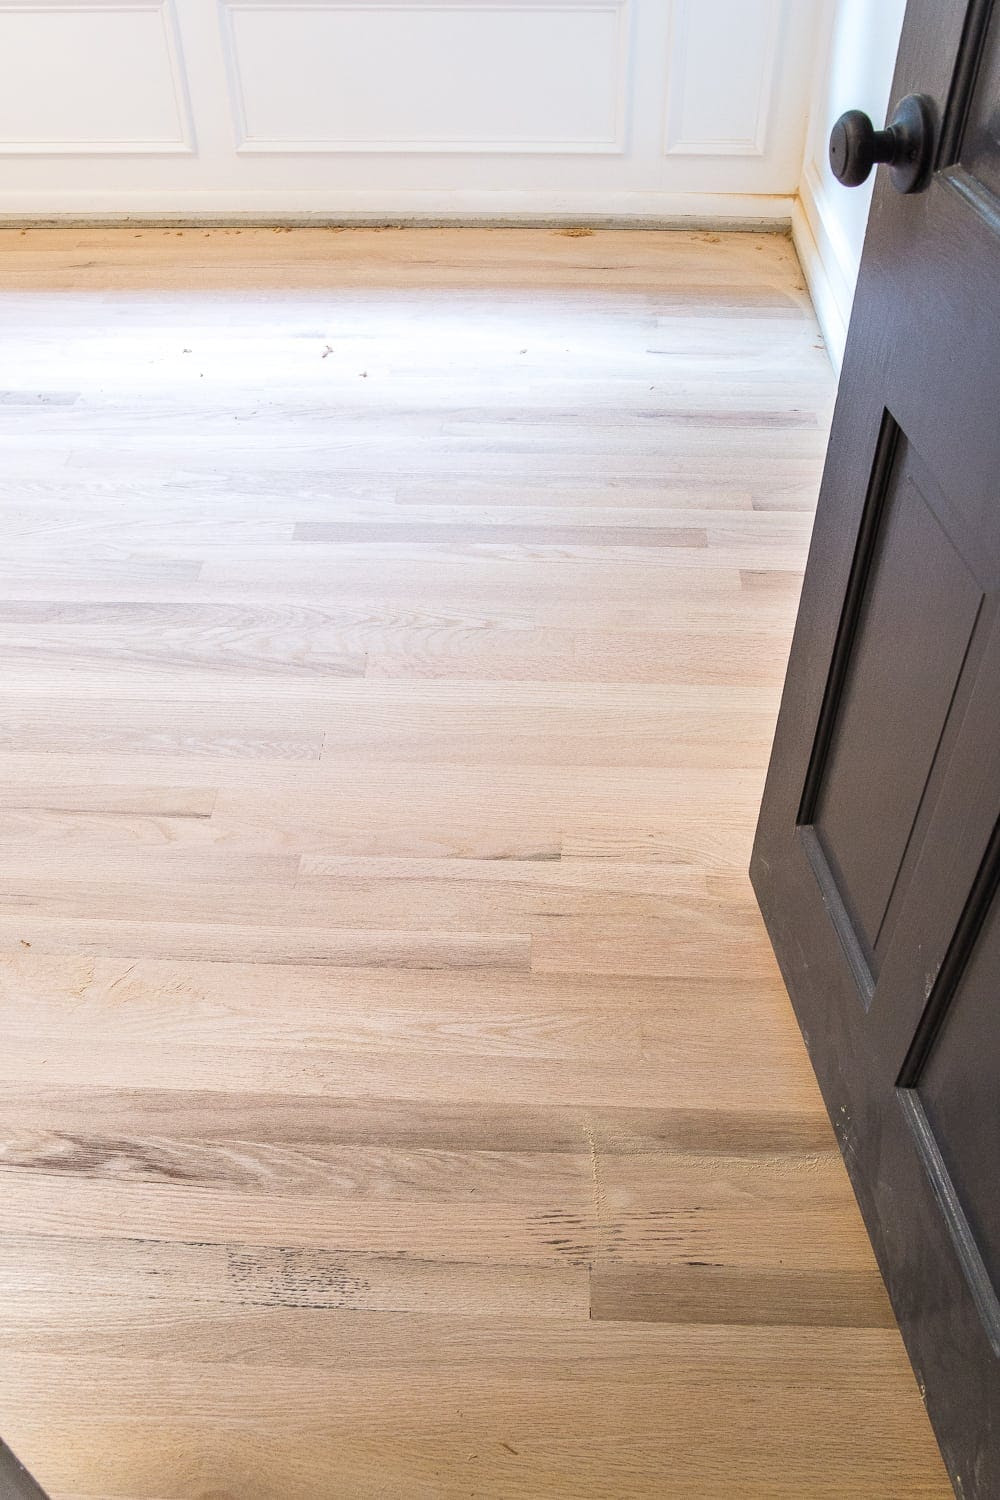 Sand floors down to refinish hardwood floors